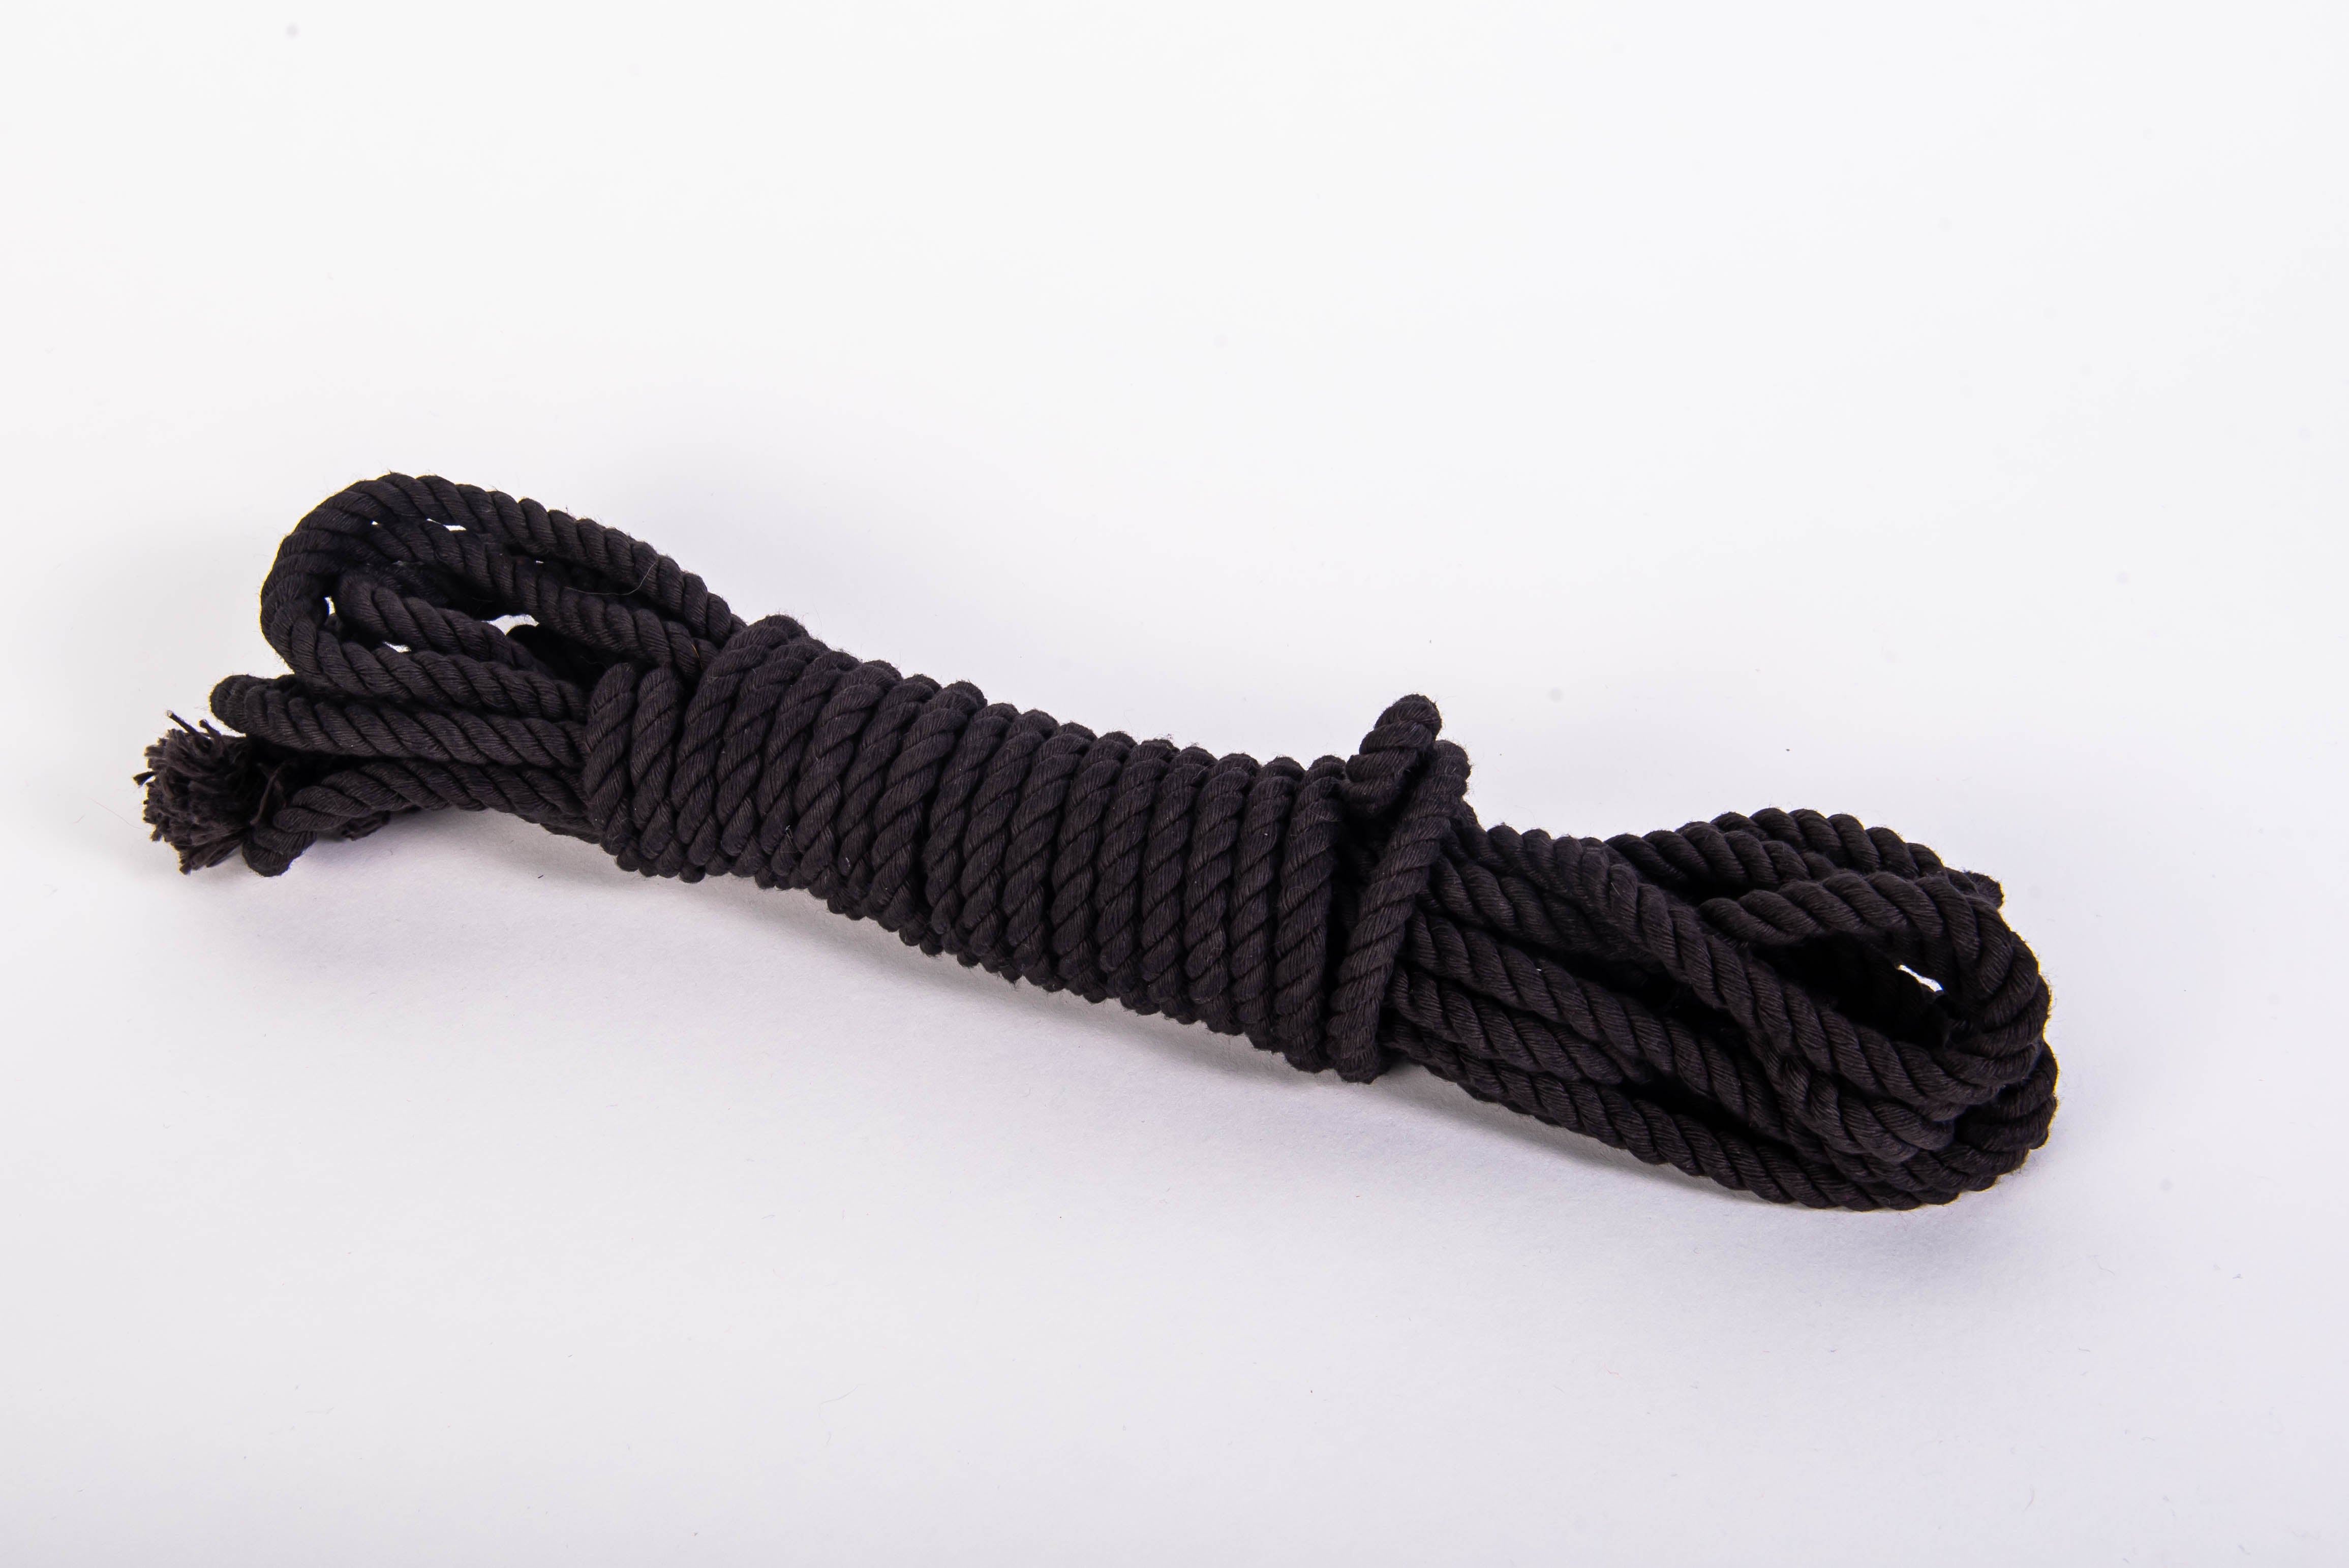 Black cotton rope